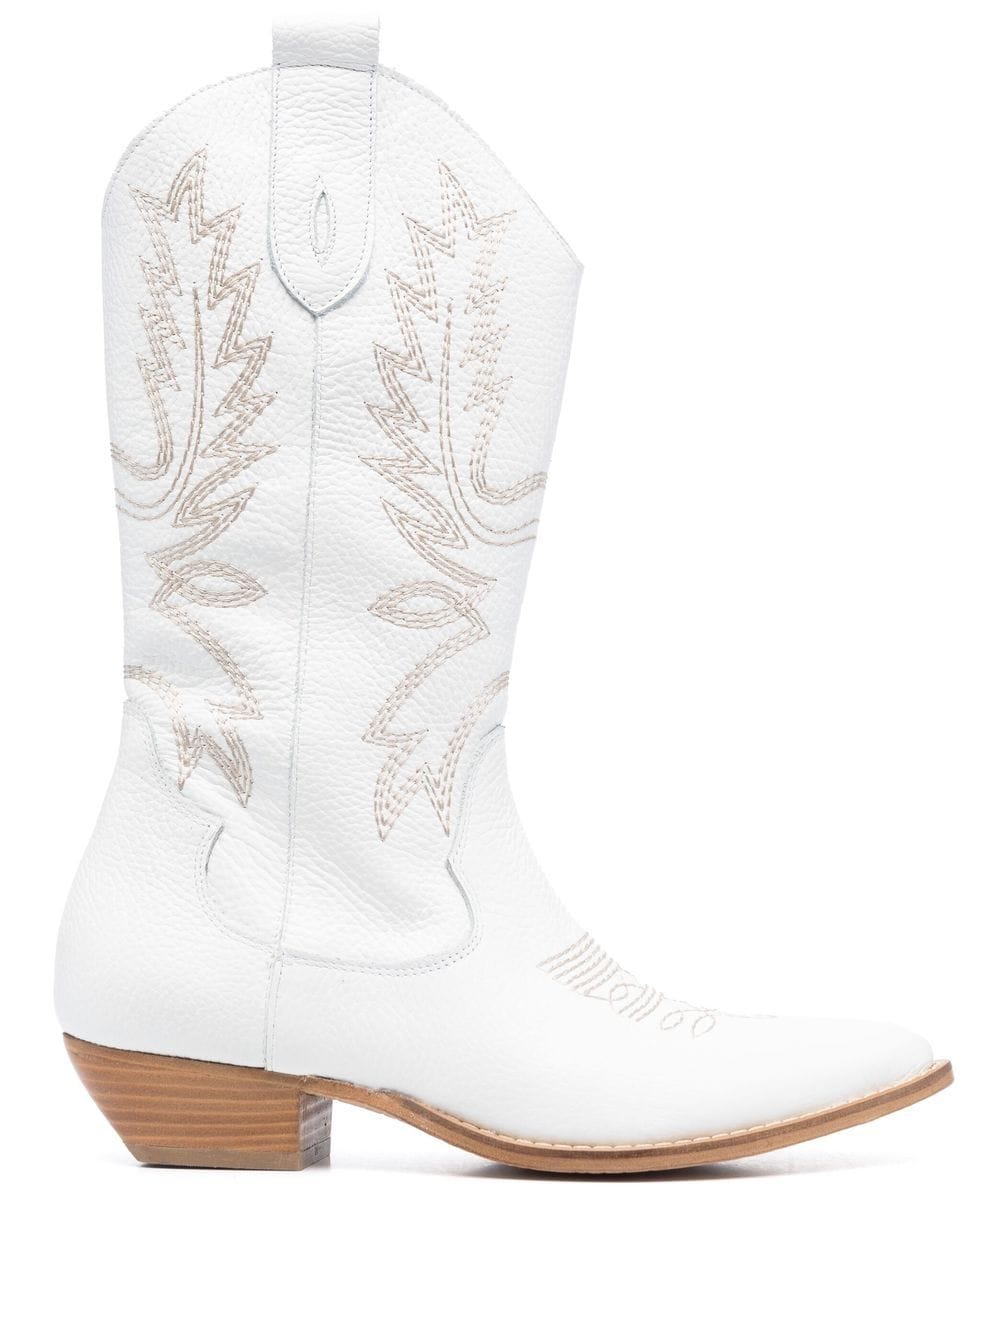 P.A.R.O.S.H. embroidered-design texan boots - White von P.A.R.O.S.H.